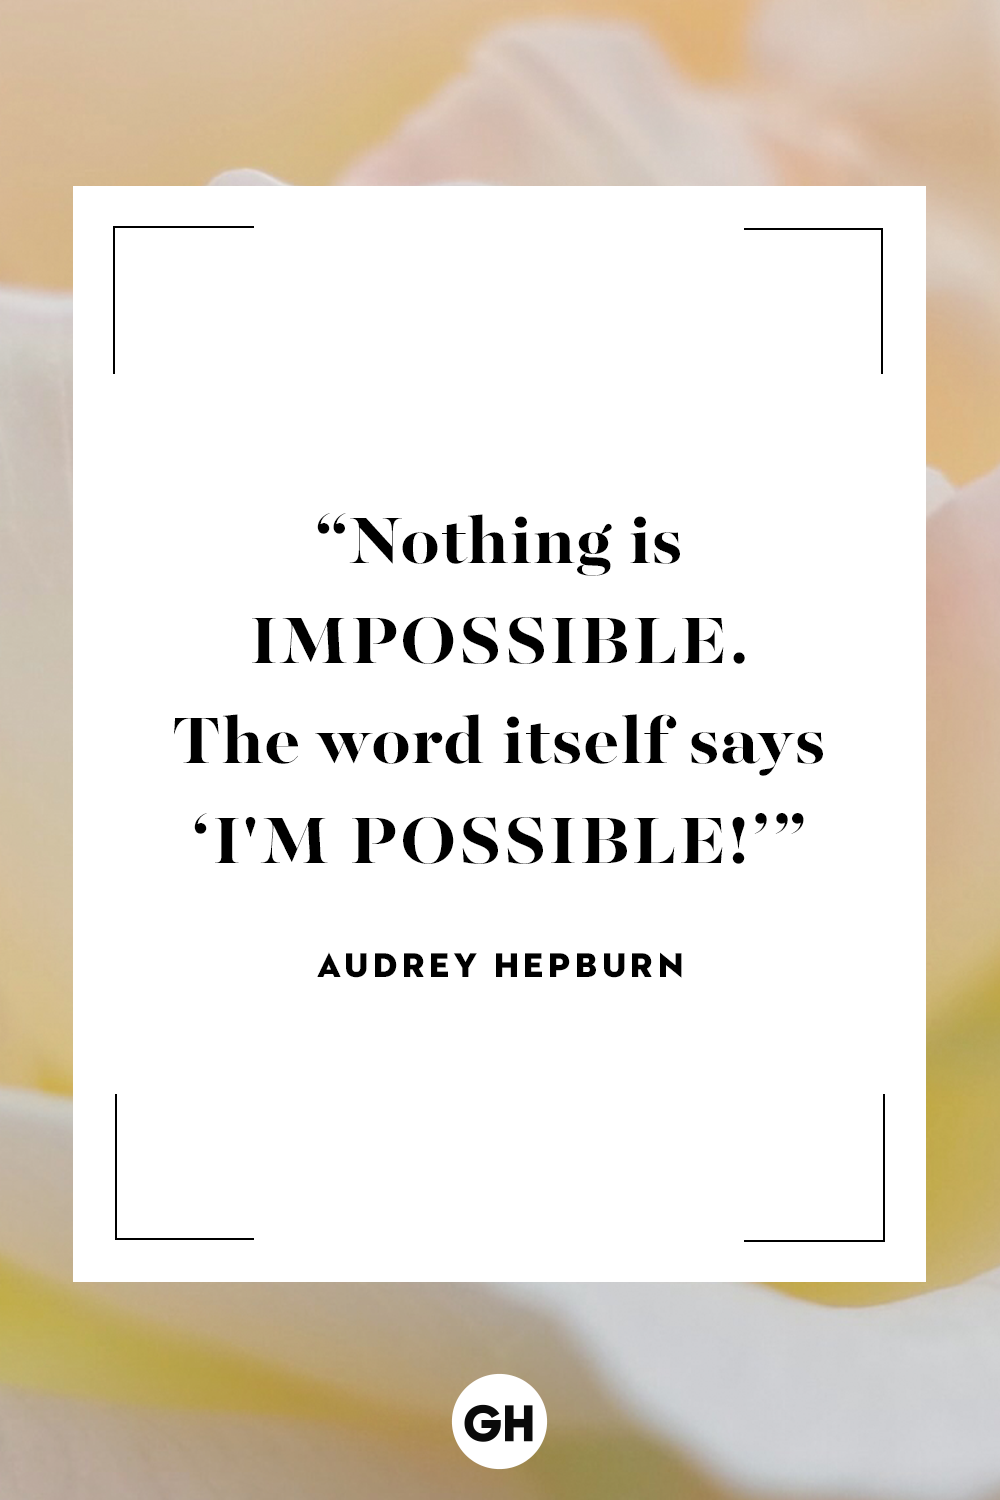 inspirational-quotes-audrey-hepburn-1562000220.png